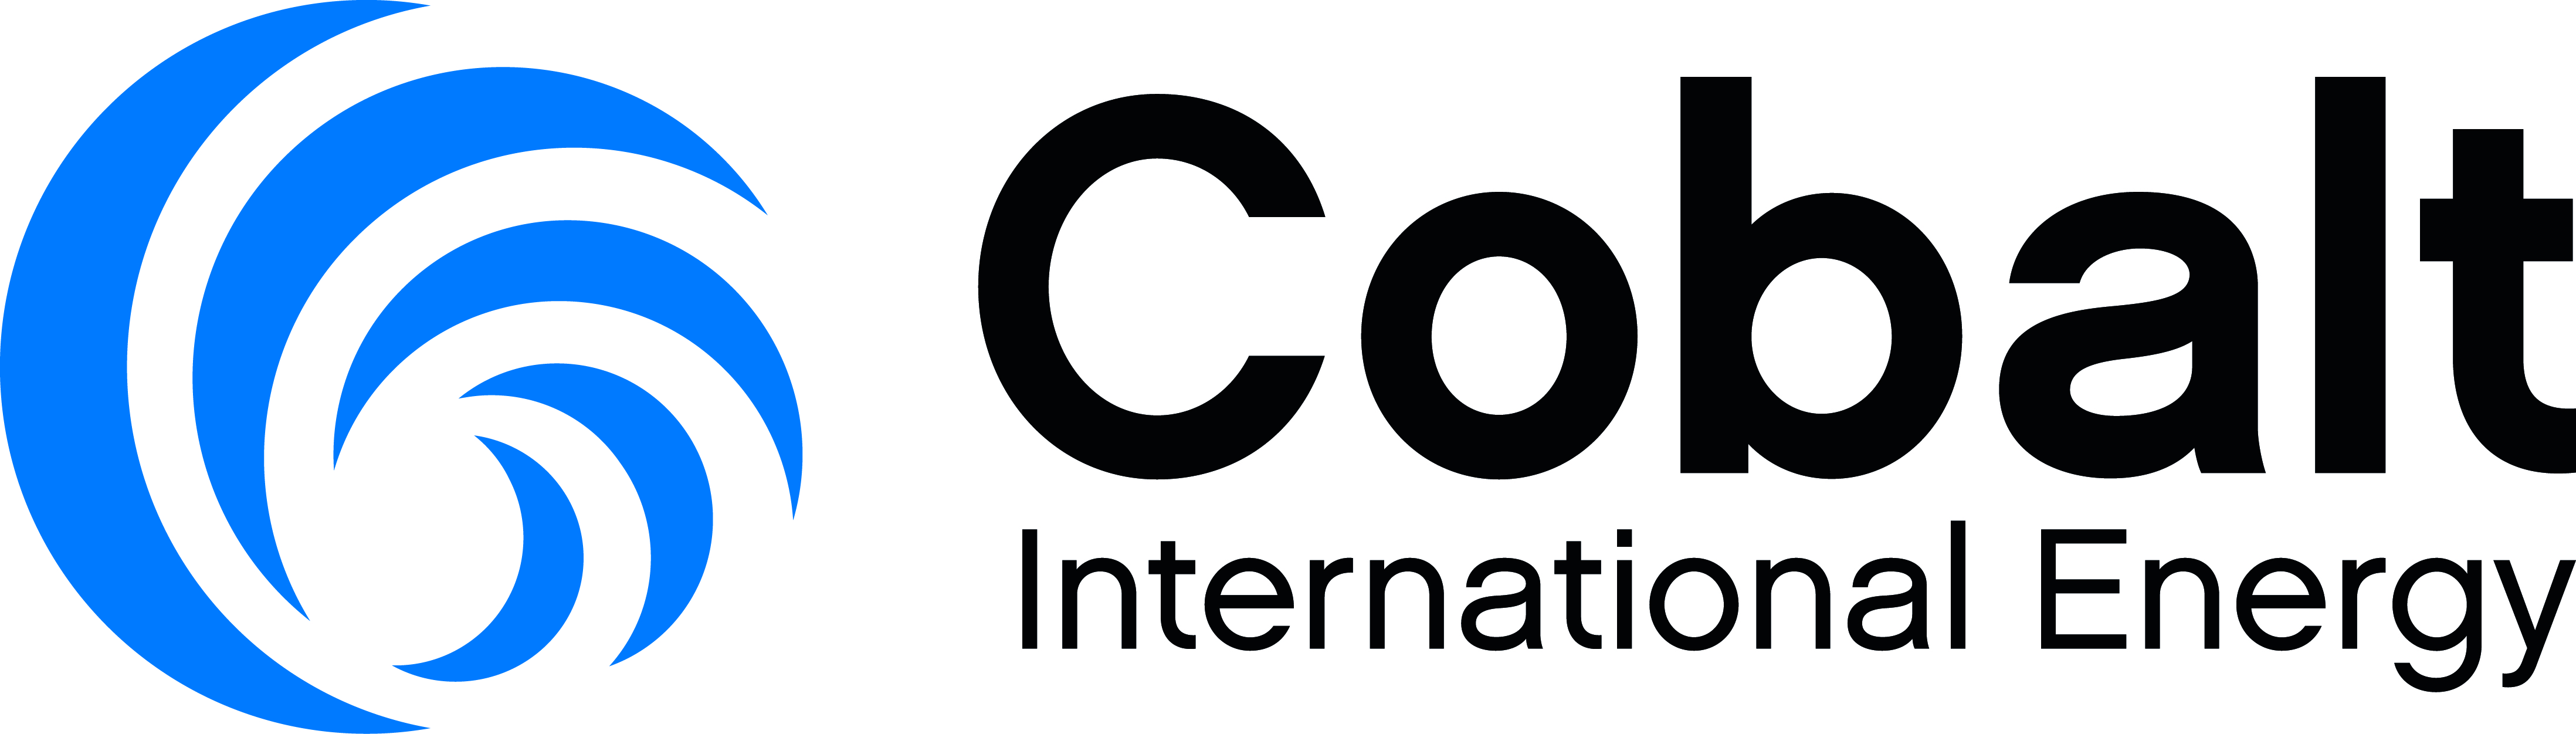 Cobalt International Energy, Inc.